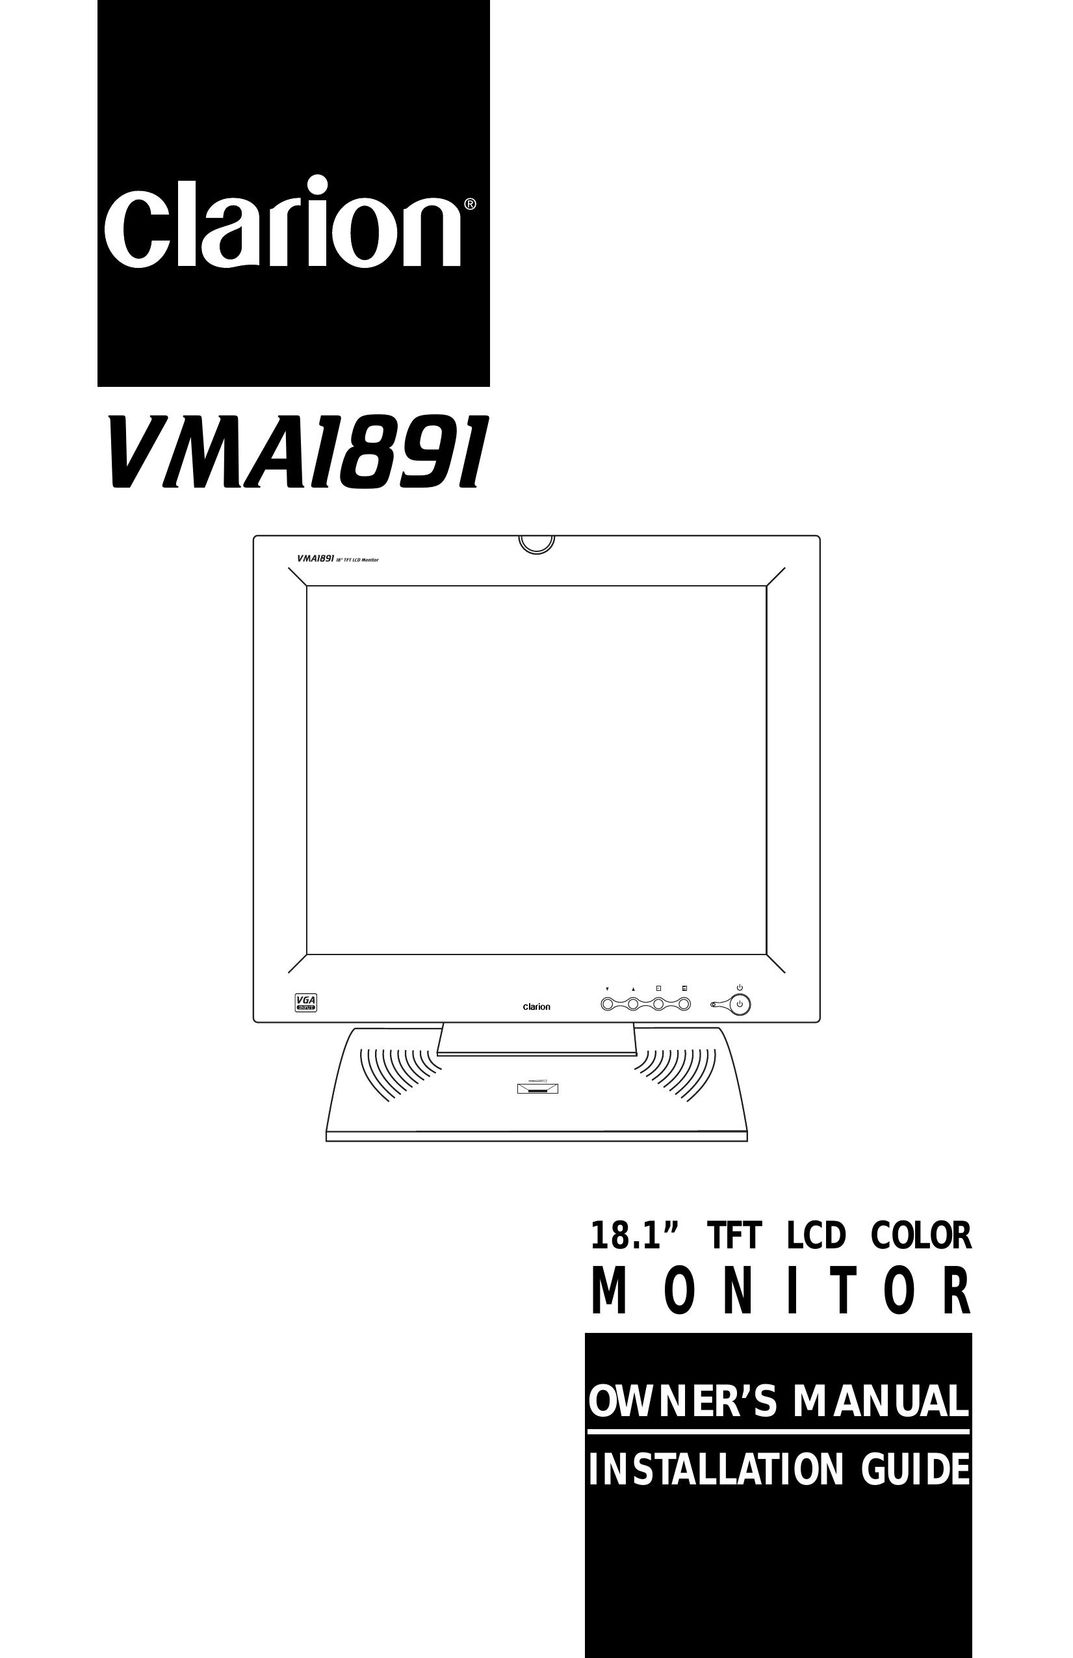 Clarion VMA1891 Computer Monitor User Manual